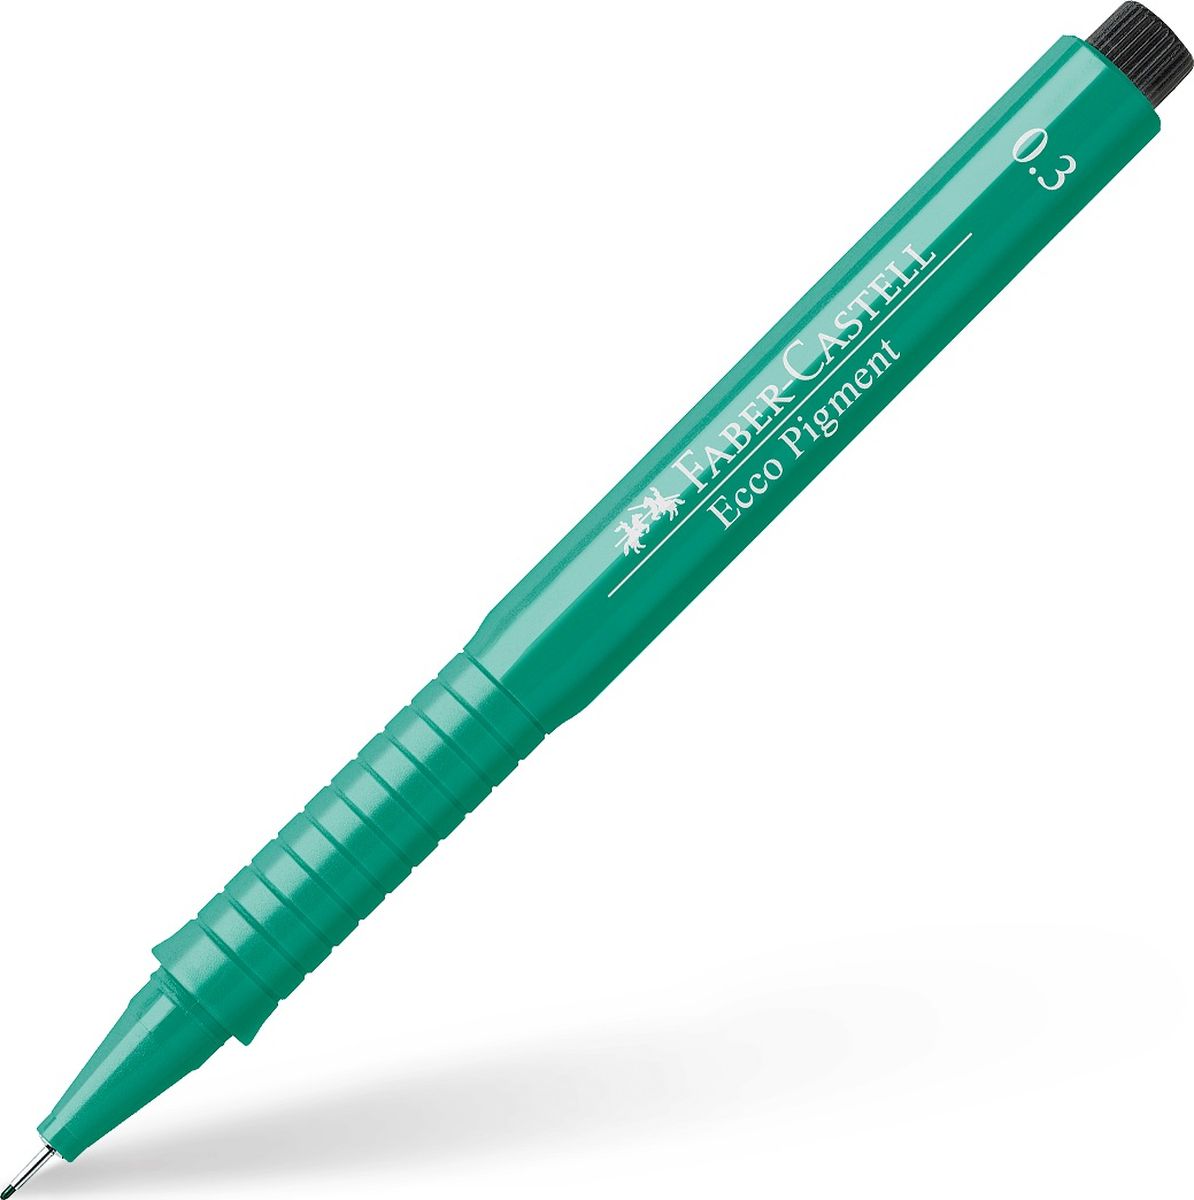 Faber-Castell Ручка капиллярная Ecco Pigment 0.3 цвет чернил зеленый 166363